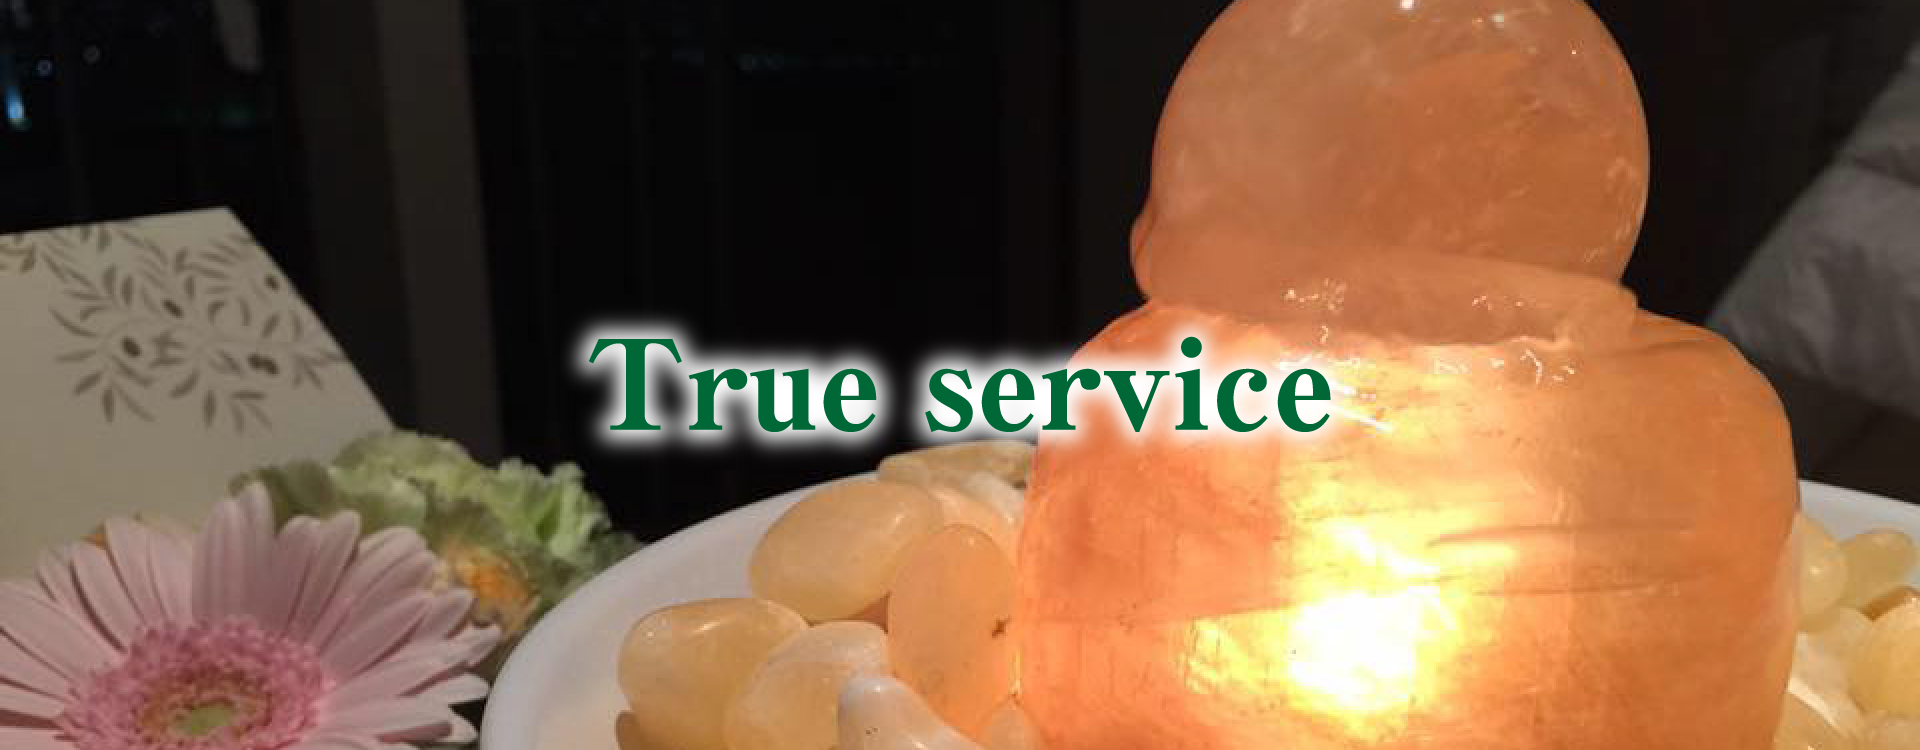 True service